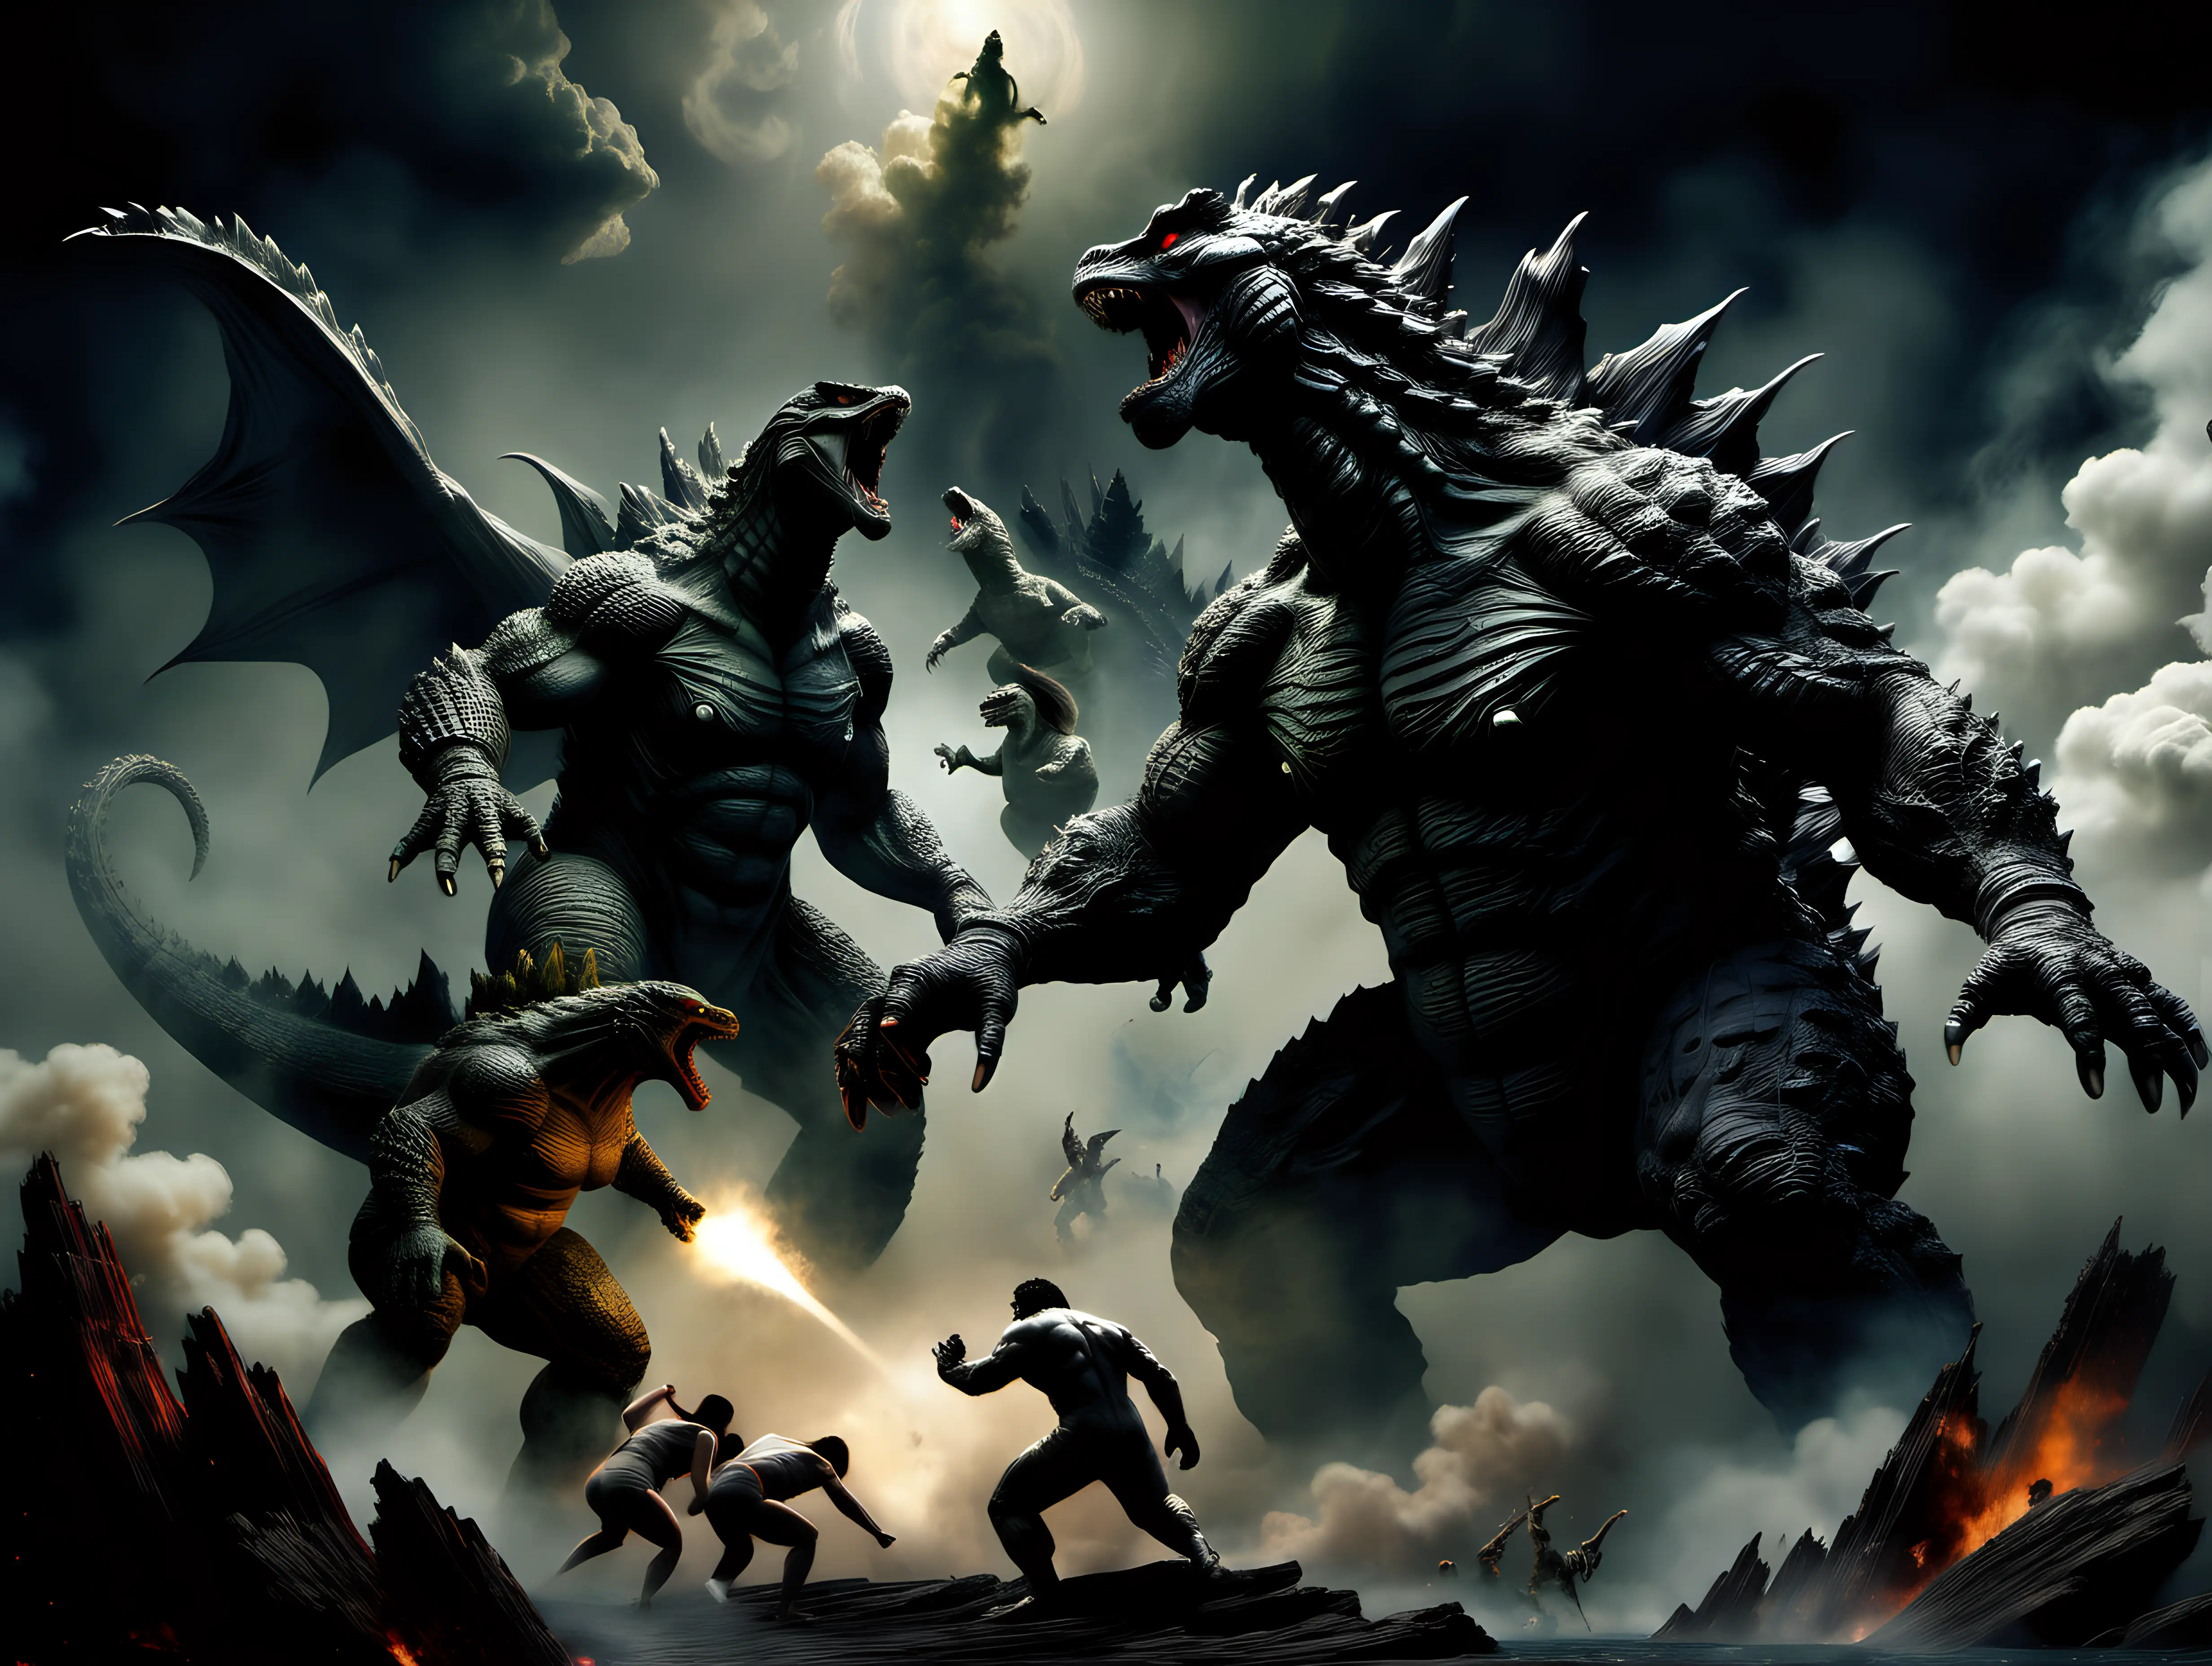 Godzilla Battles Monsters on Saturn Realism Inspired by Frank Frazetta and Annie Leibovitz